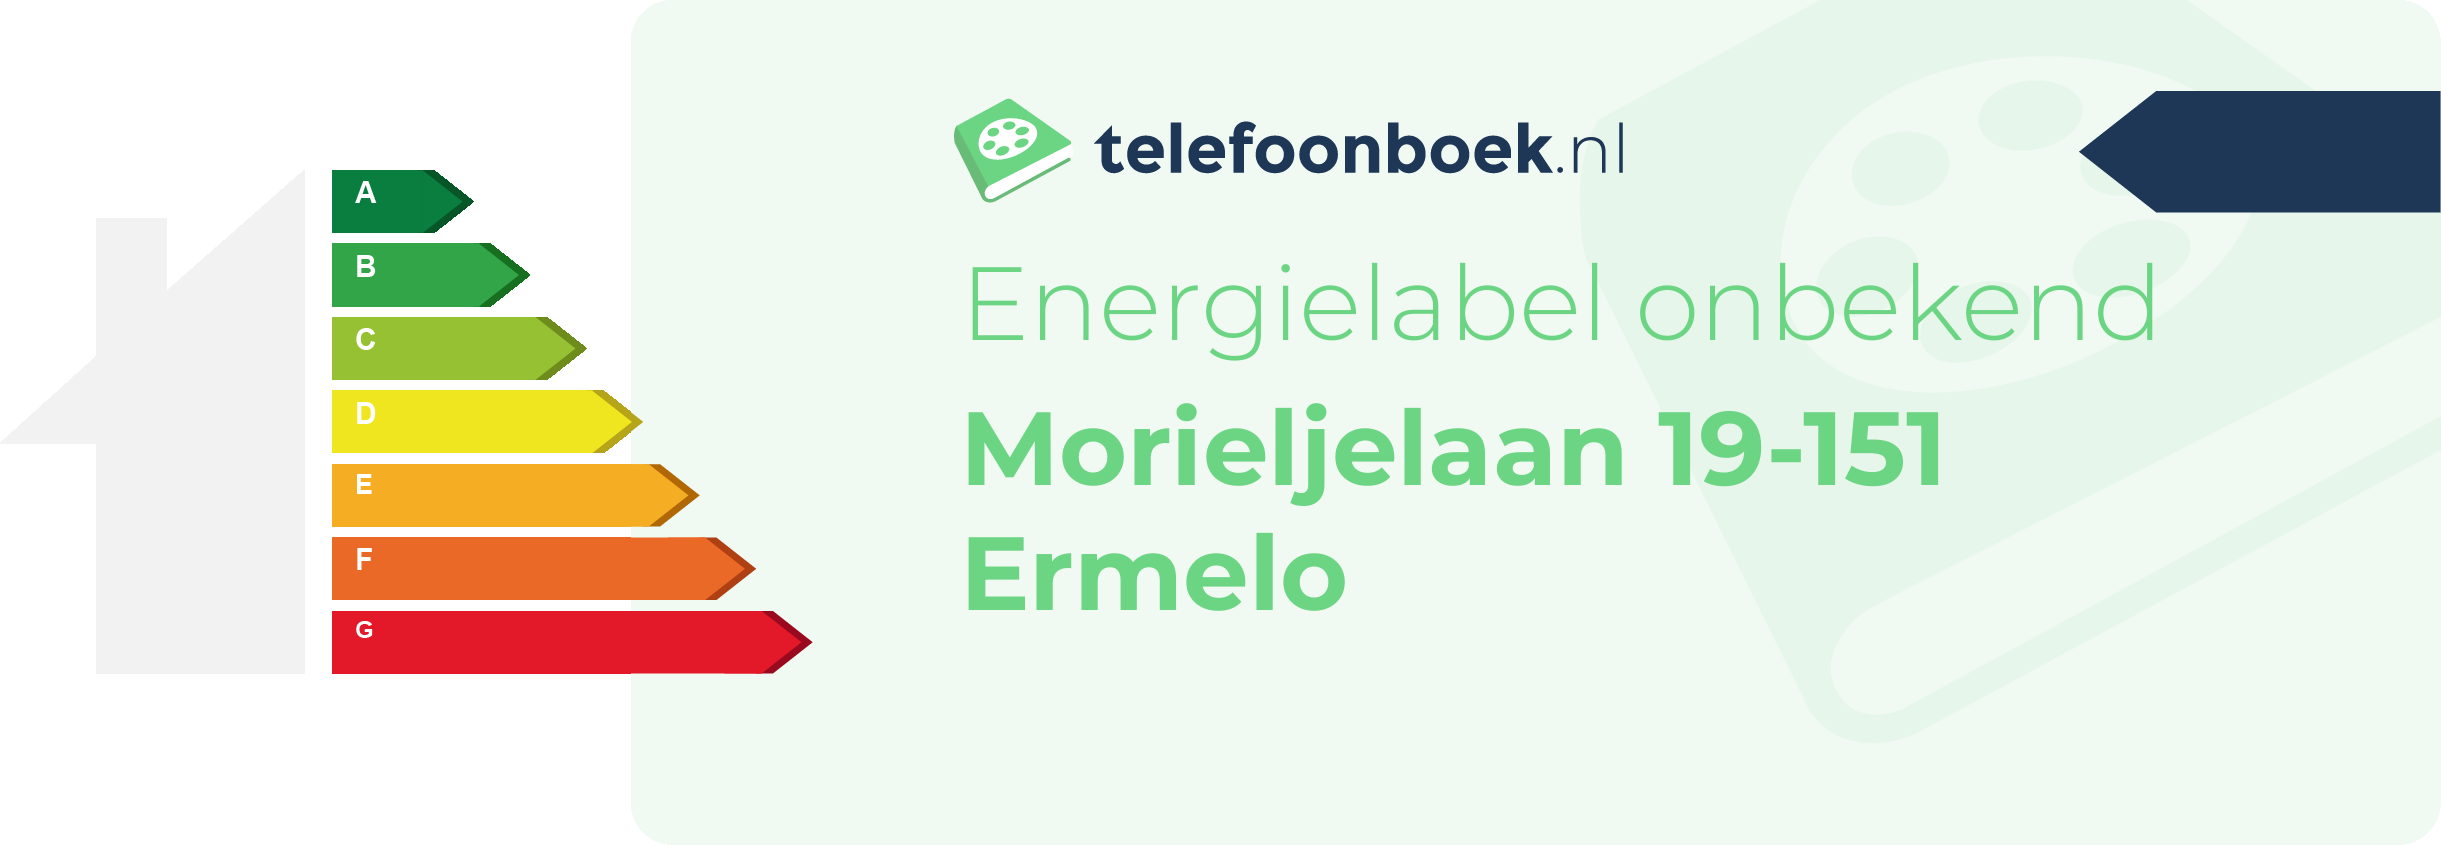 Energielabel Morieljelaan 19-151 Ermelo